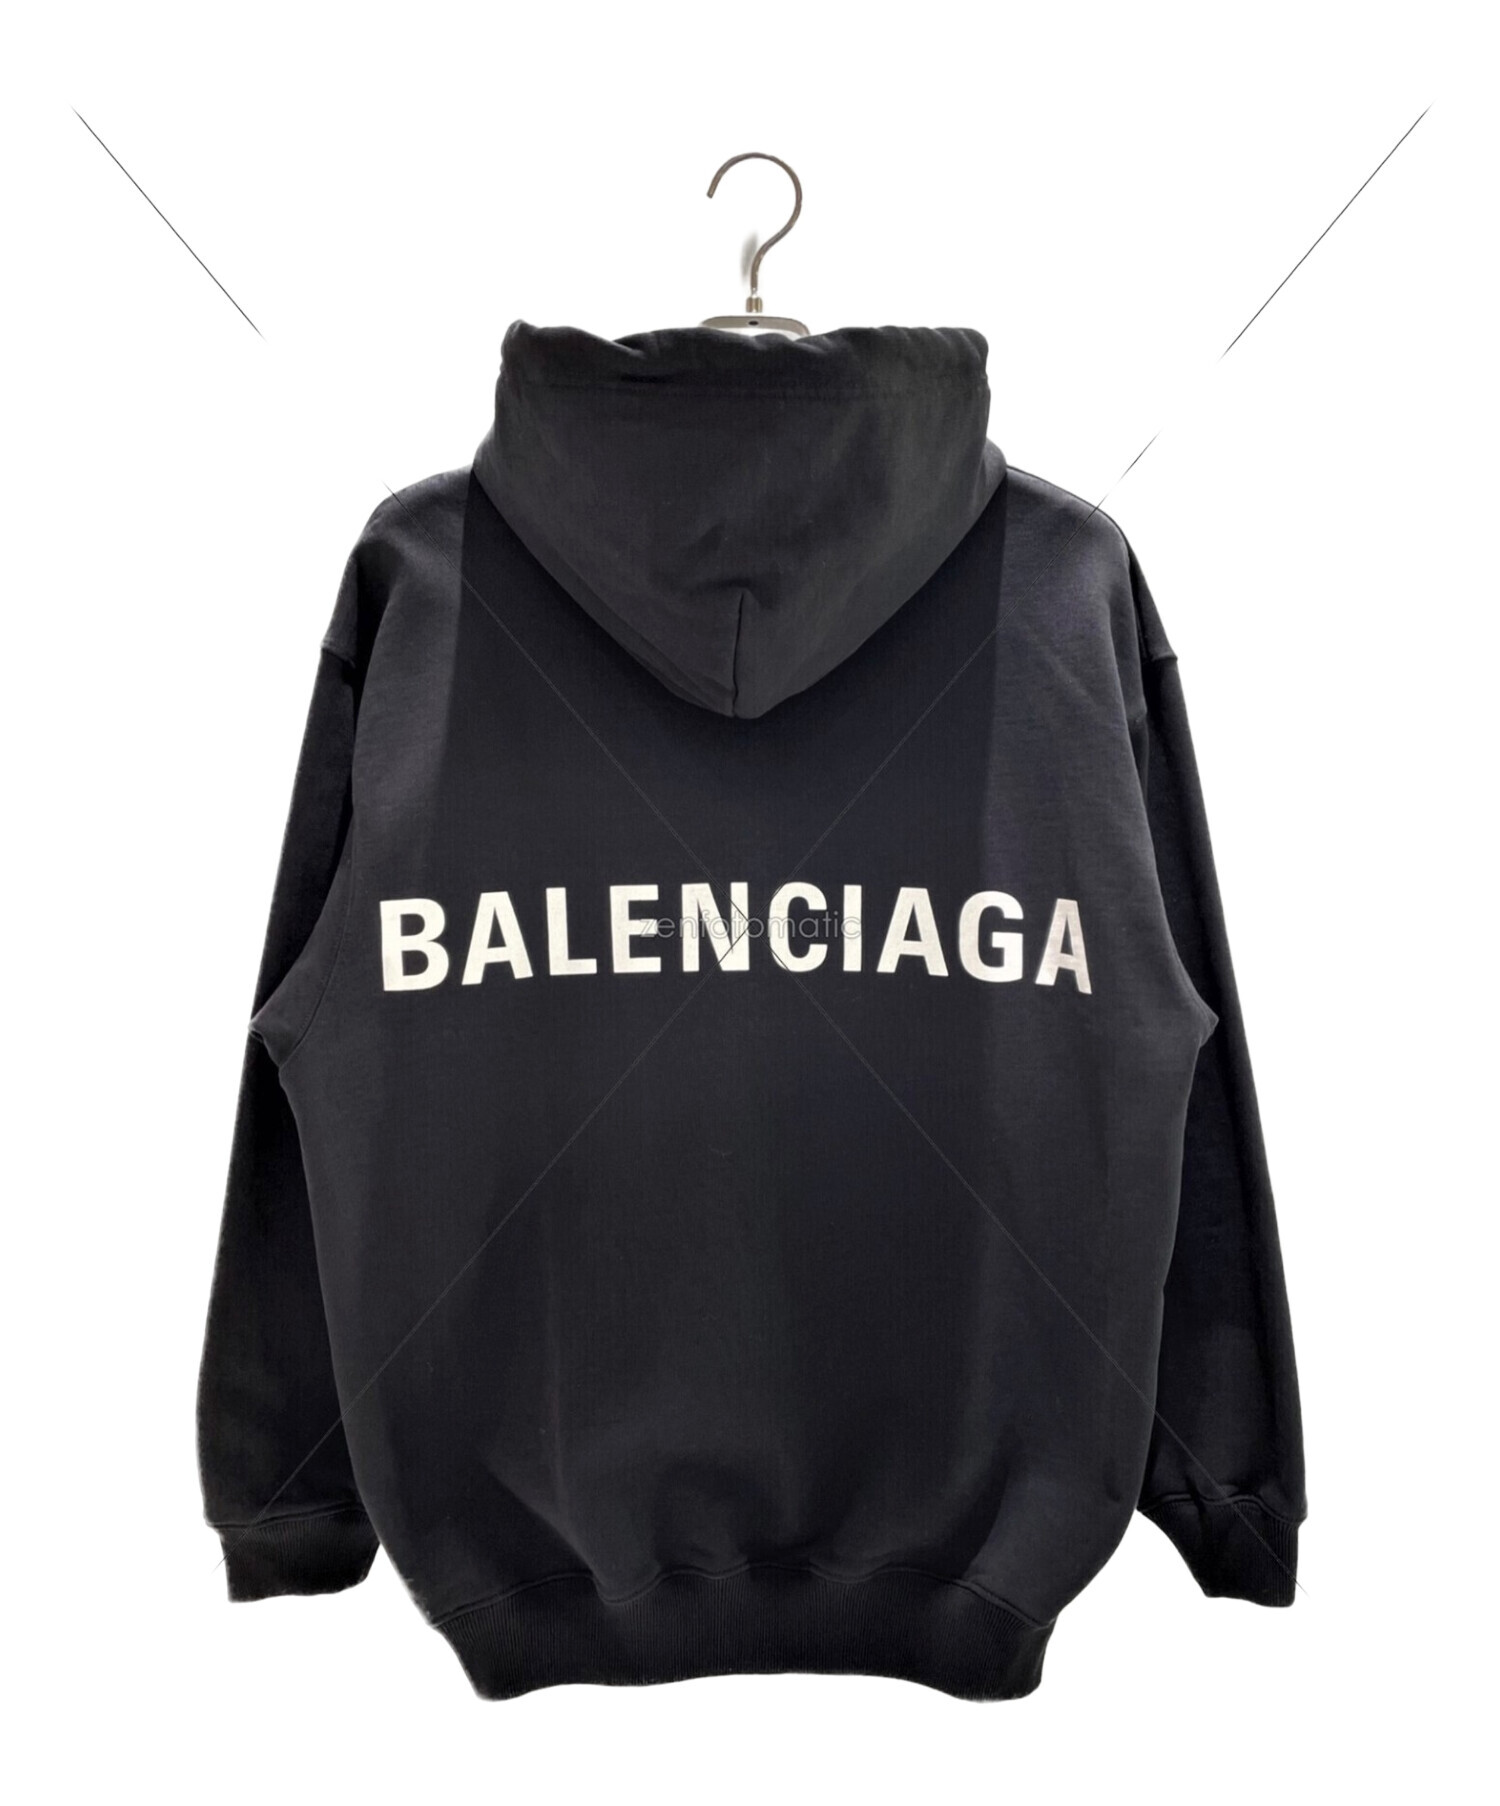 Balenciaga バレンシアガ オーバーサイズバックロゴパーカー - パーカー